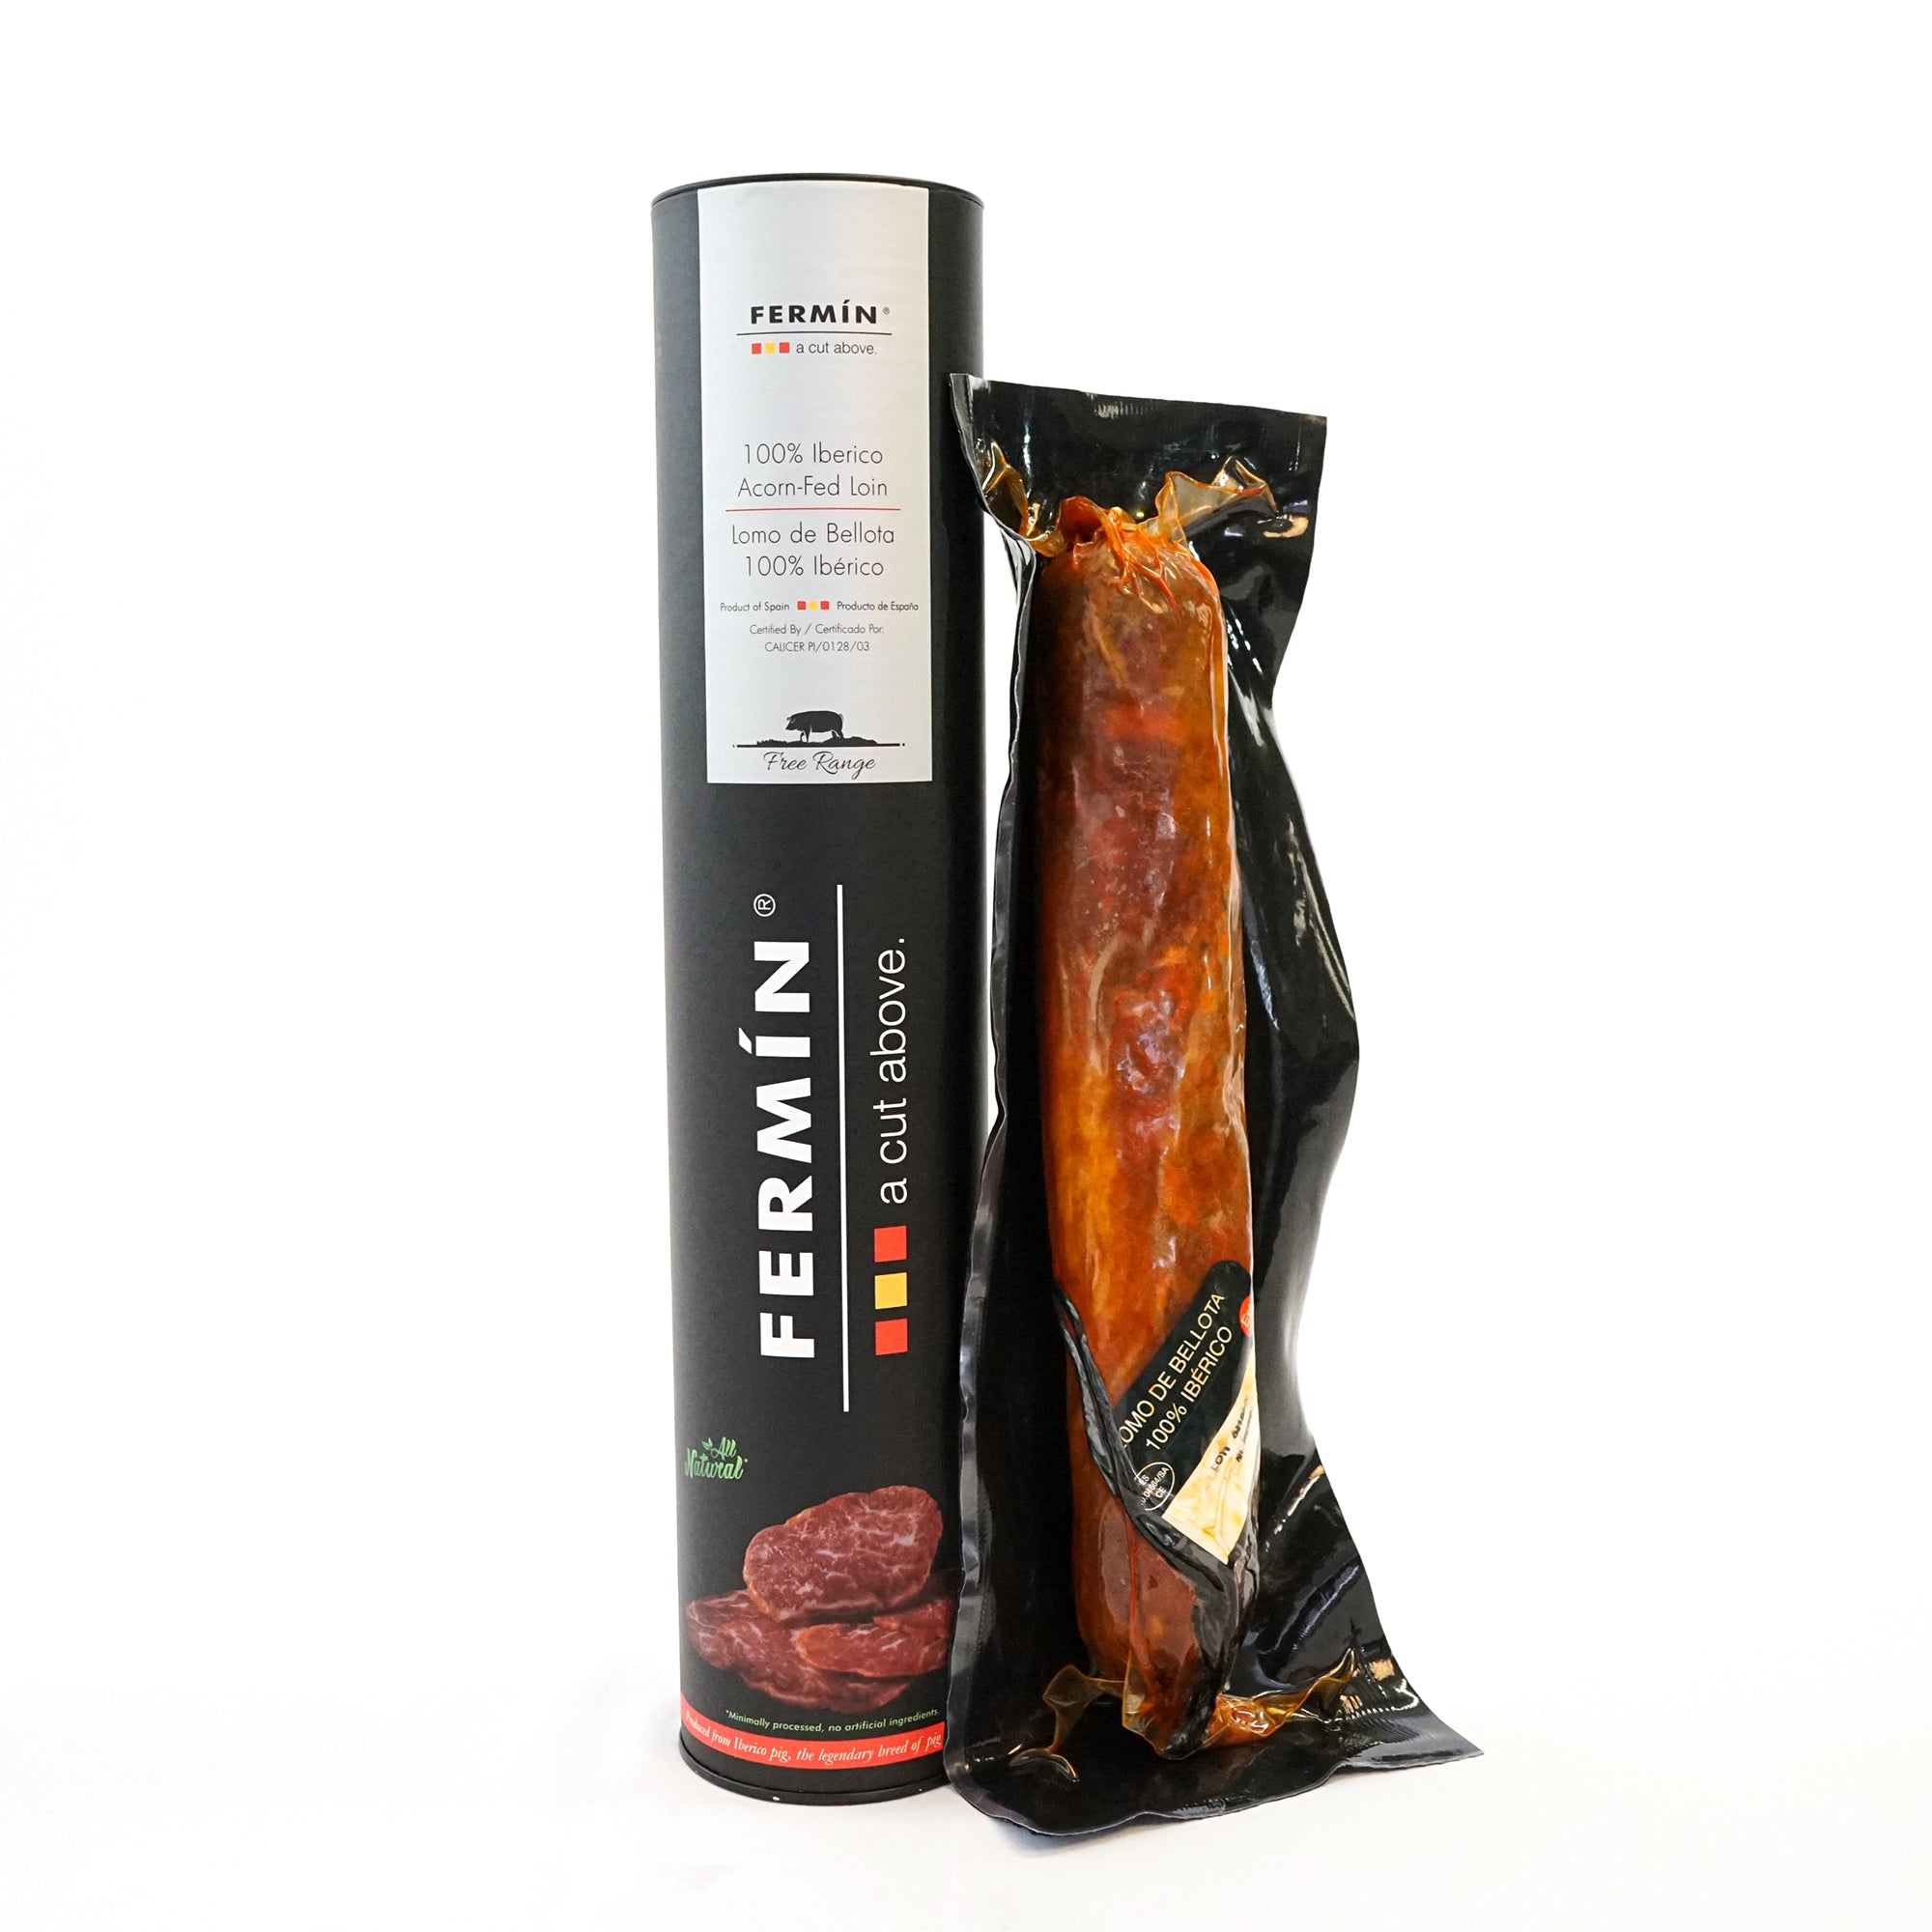 100% Iberico Acorn-fed loin tube (1 lb Average weight) by Fermin